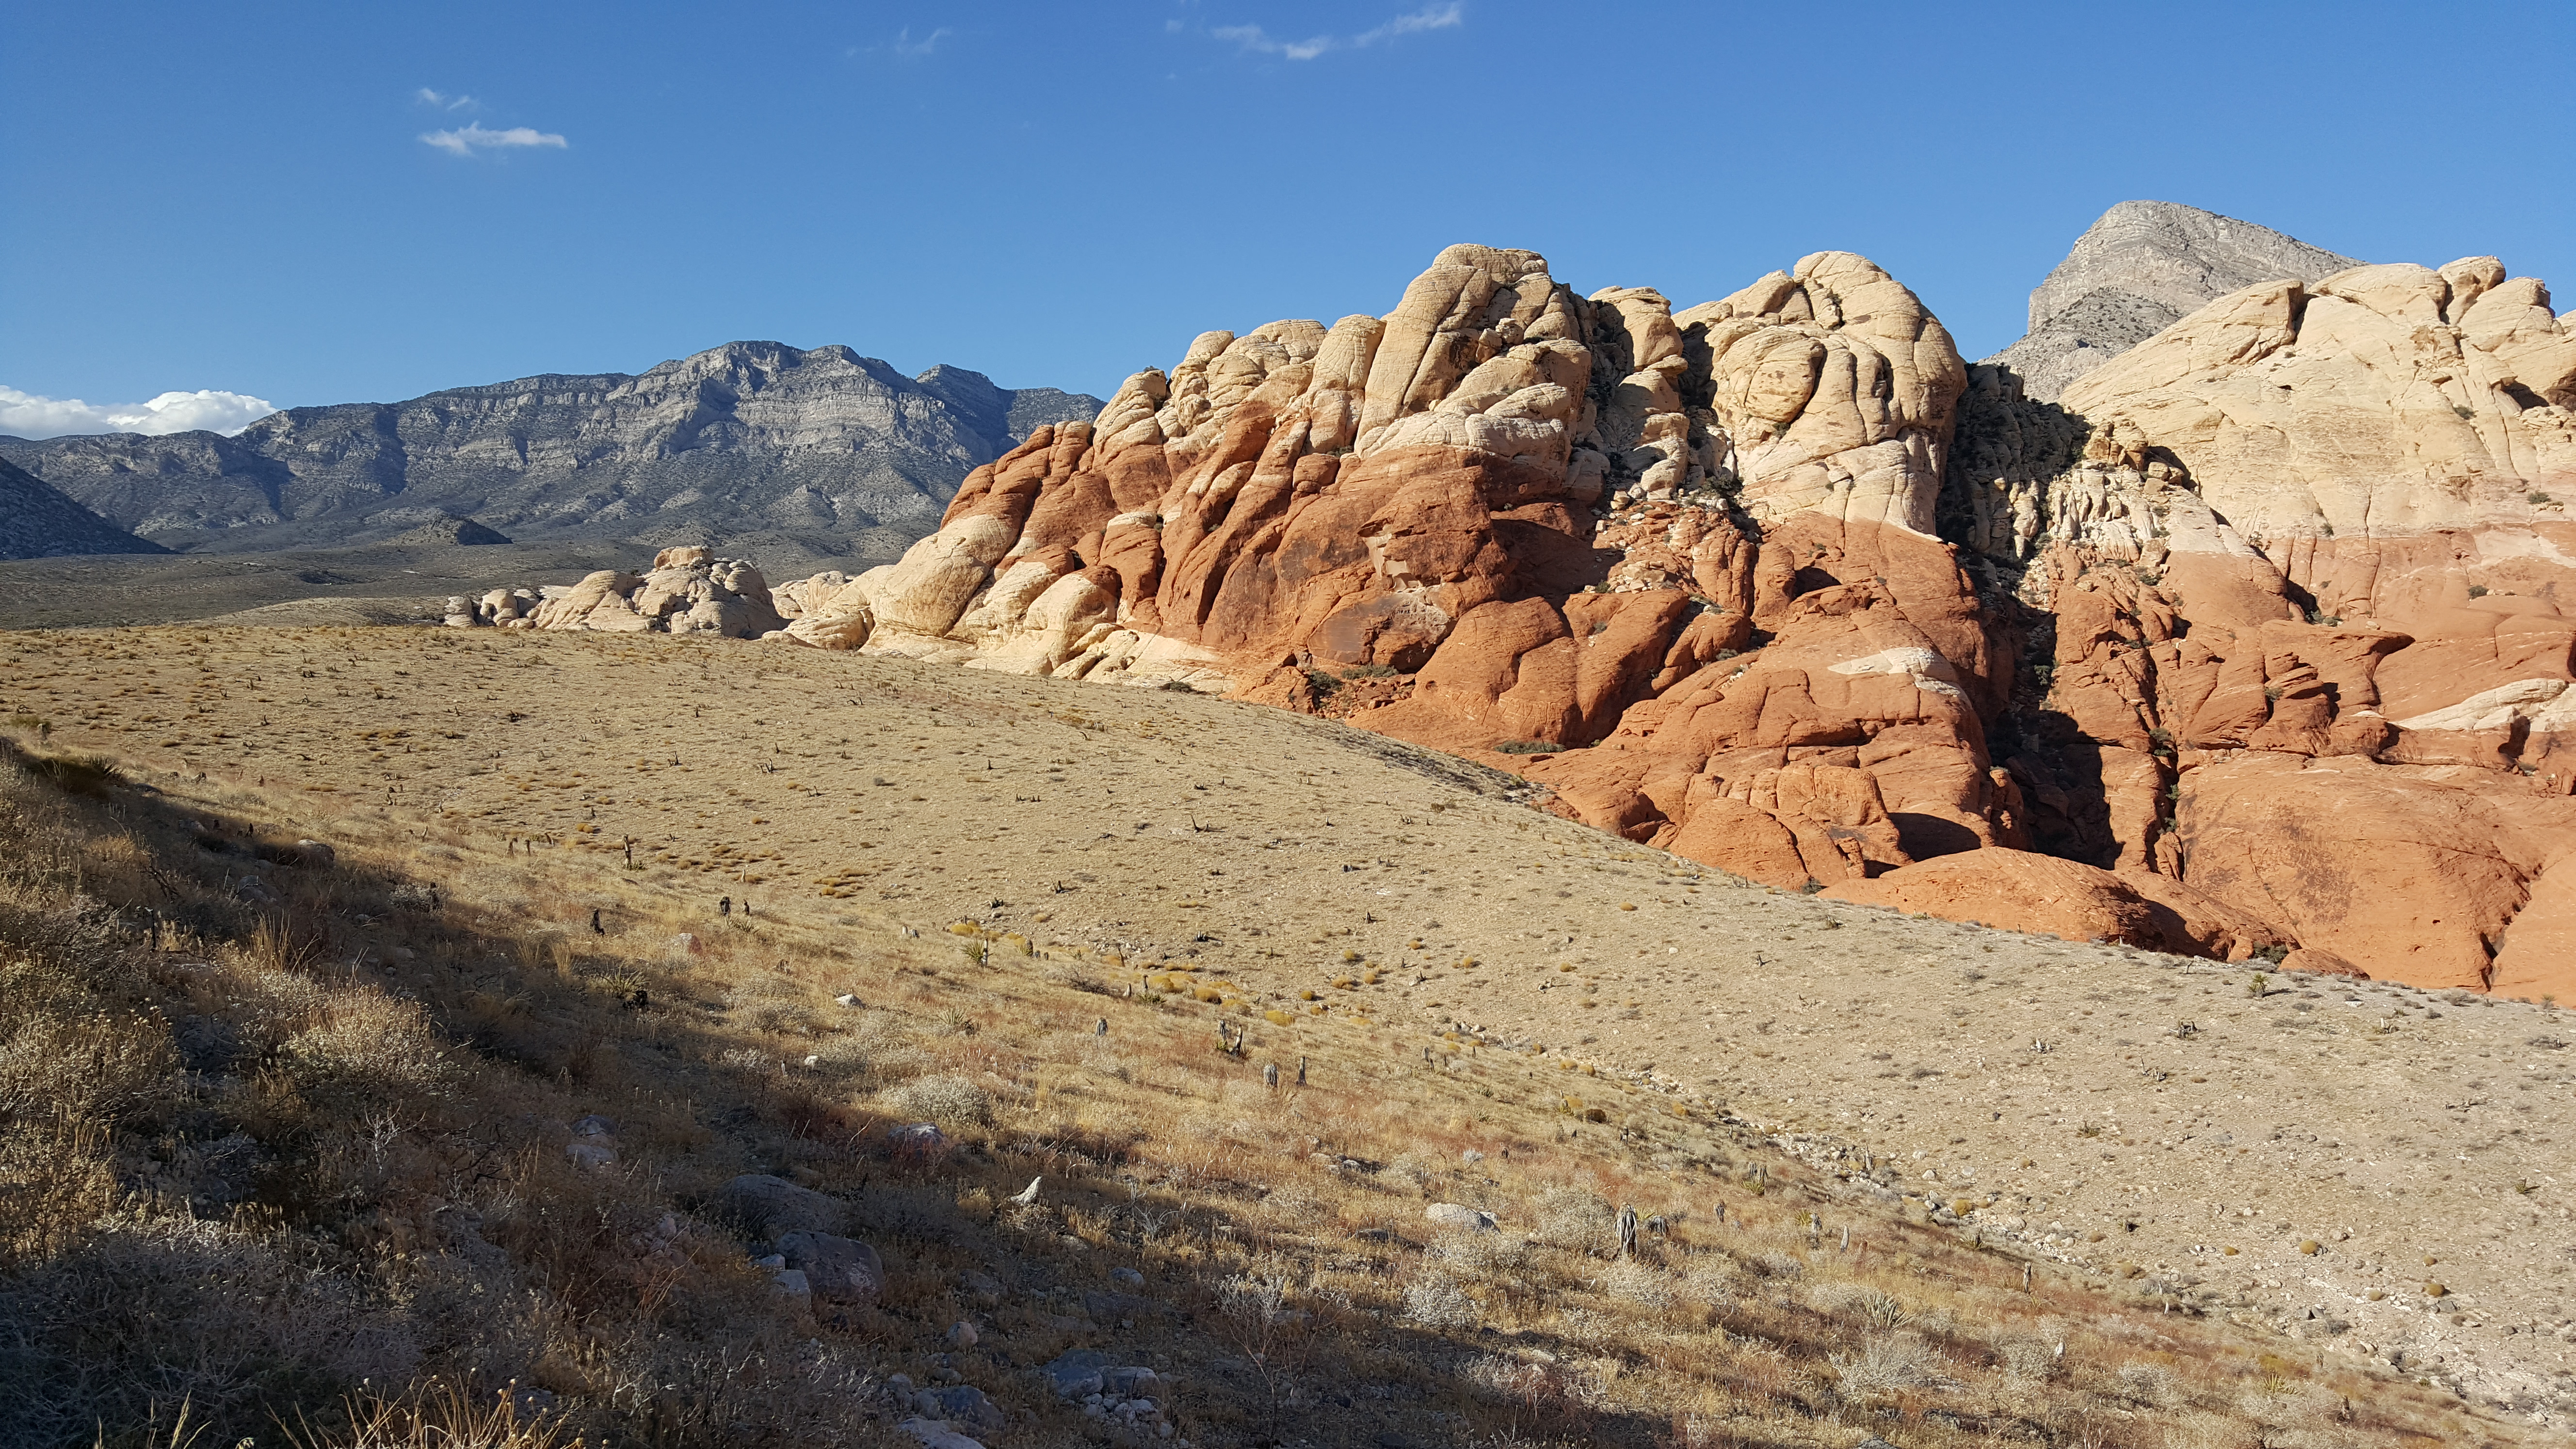 Canyon Rocks Desert Nature Landscape